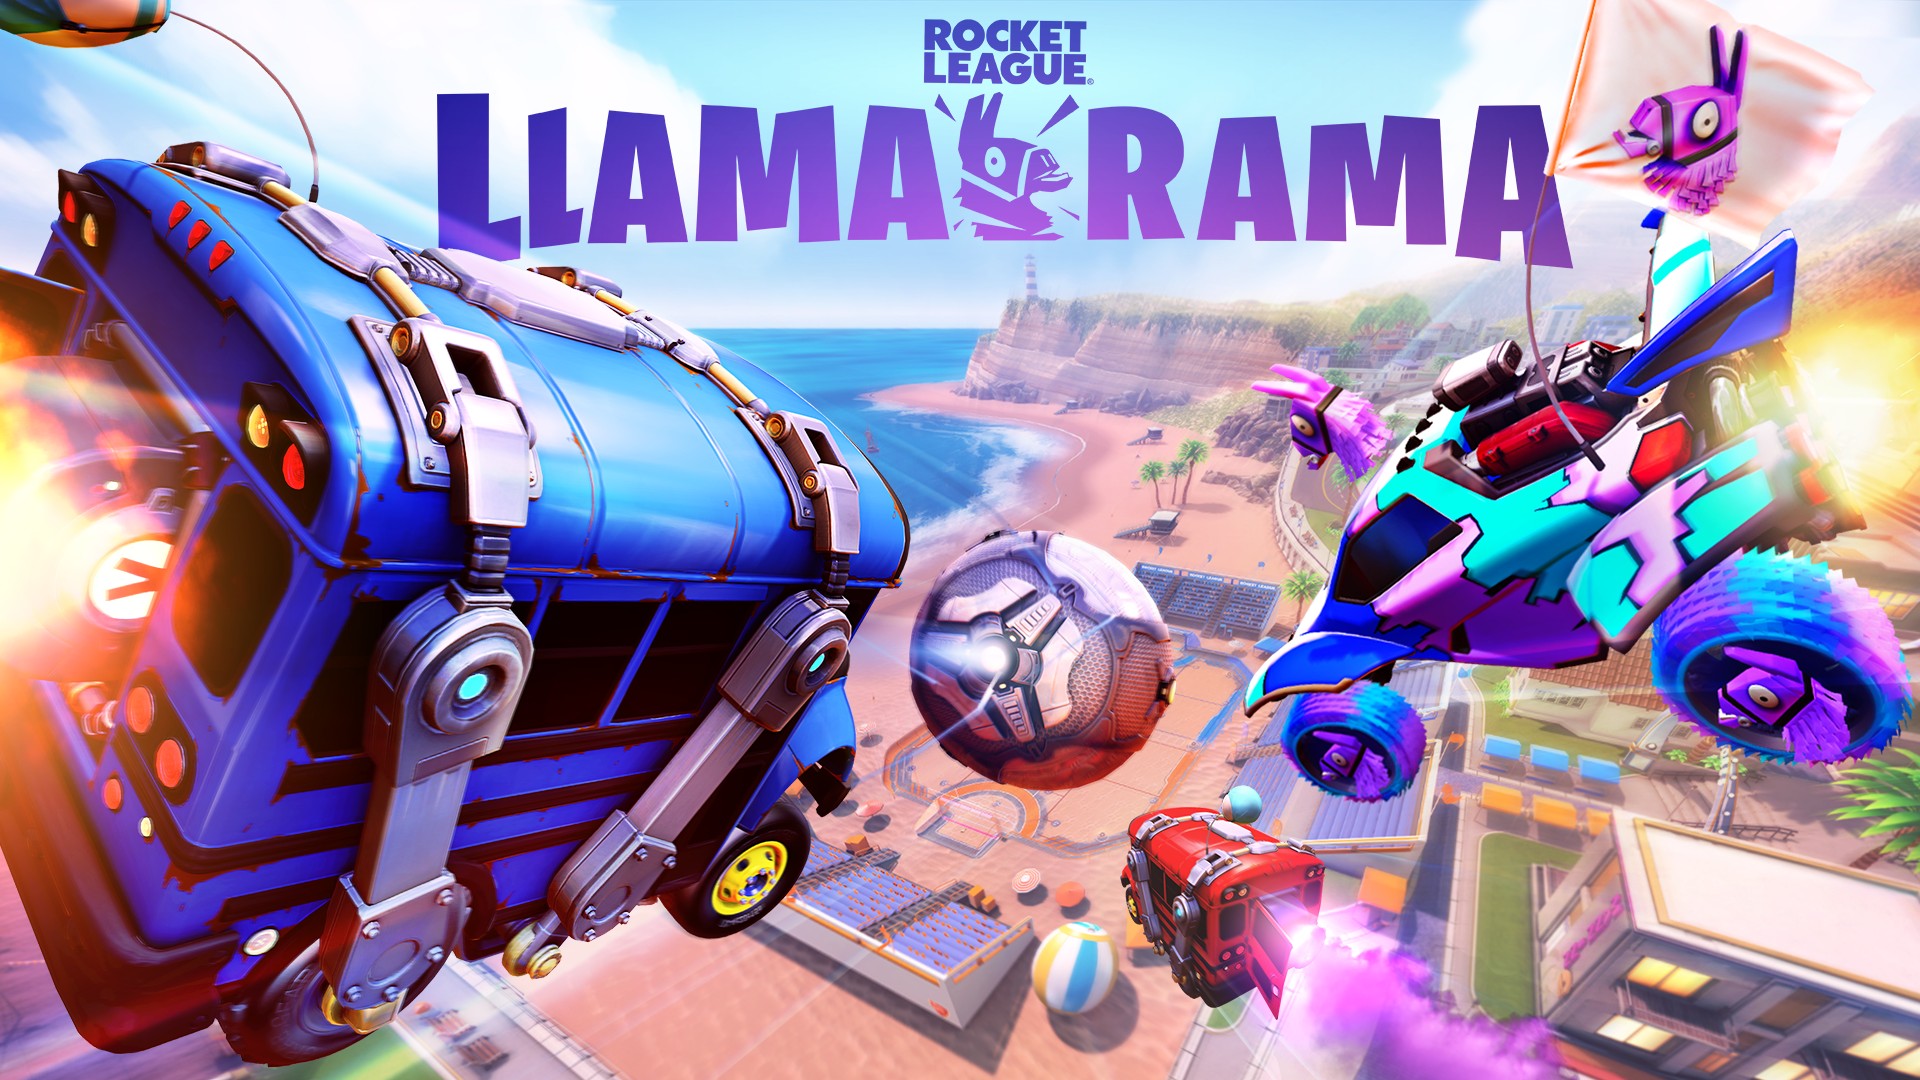 Fortnite - Llama Rama Event